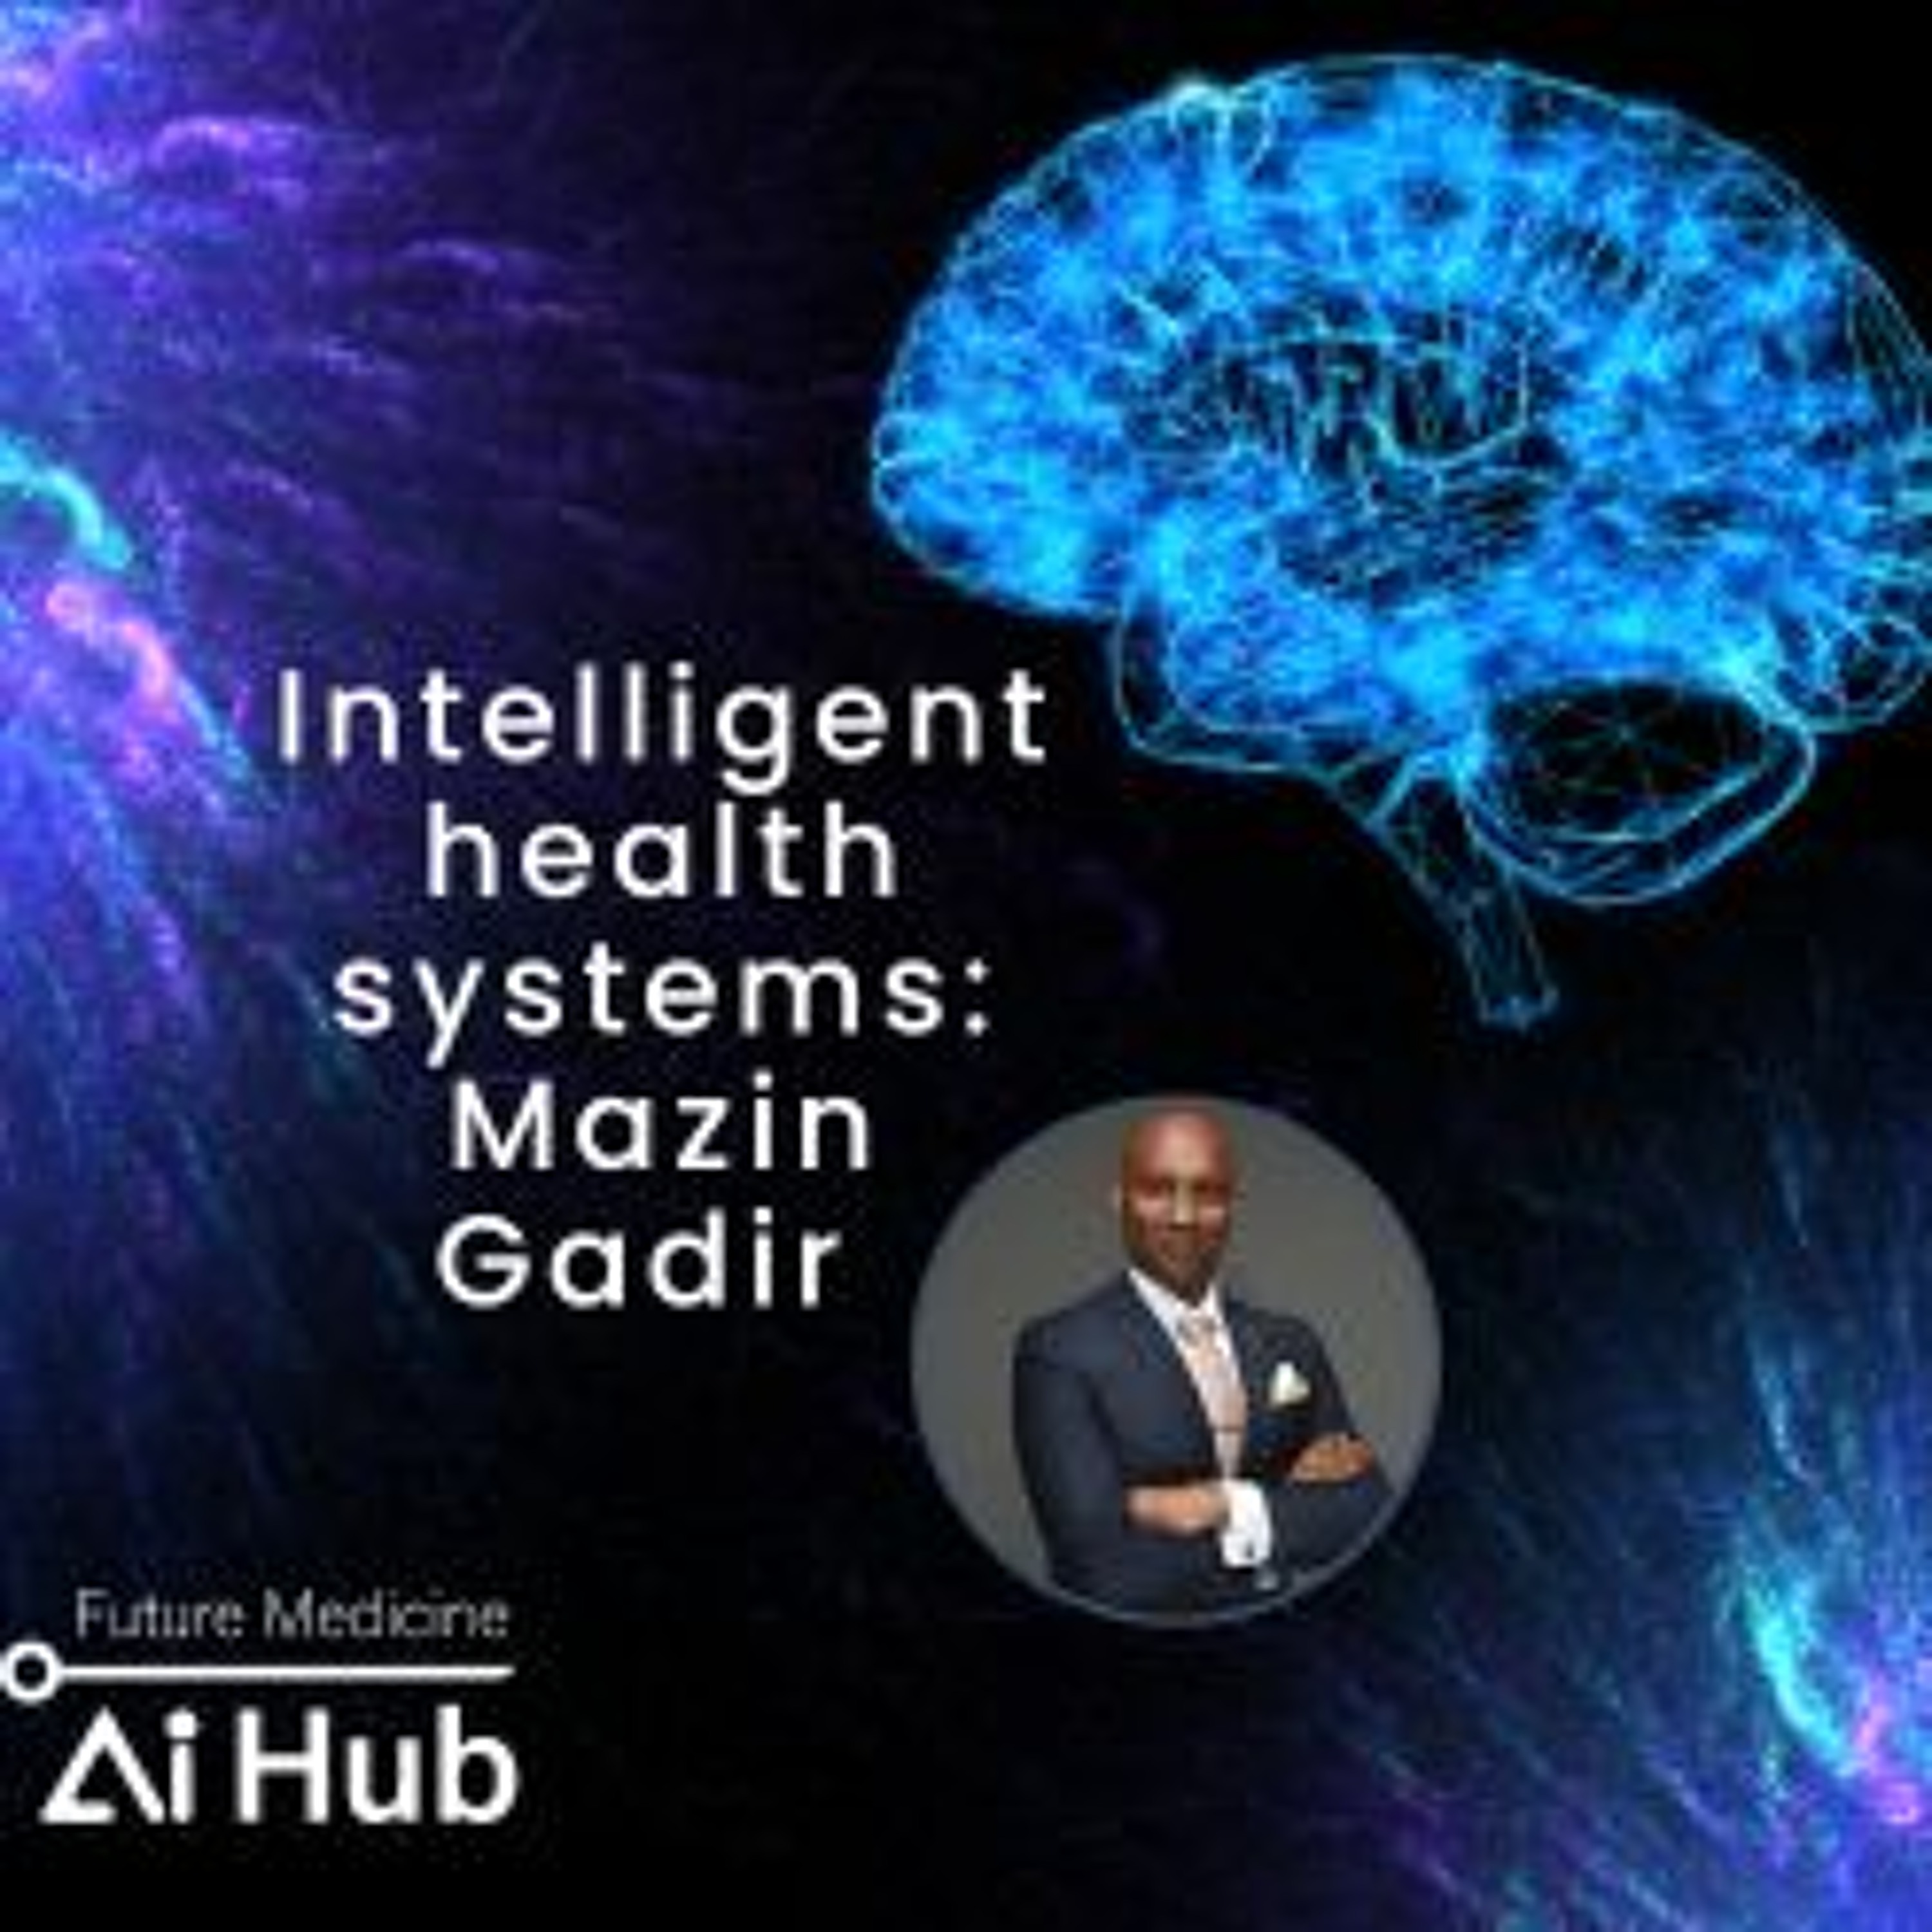 Intelligent health systems: an interview with Mazin Gadir